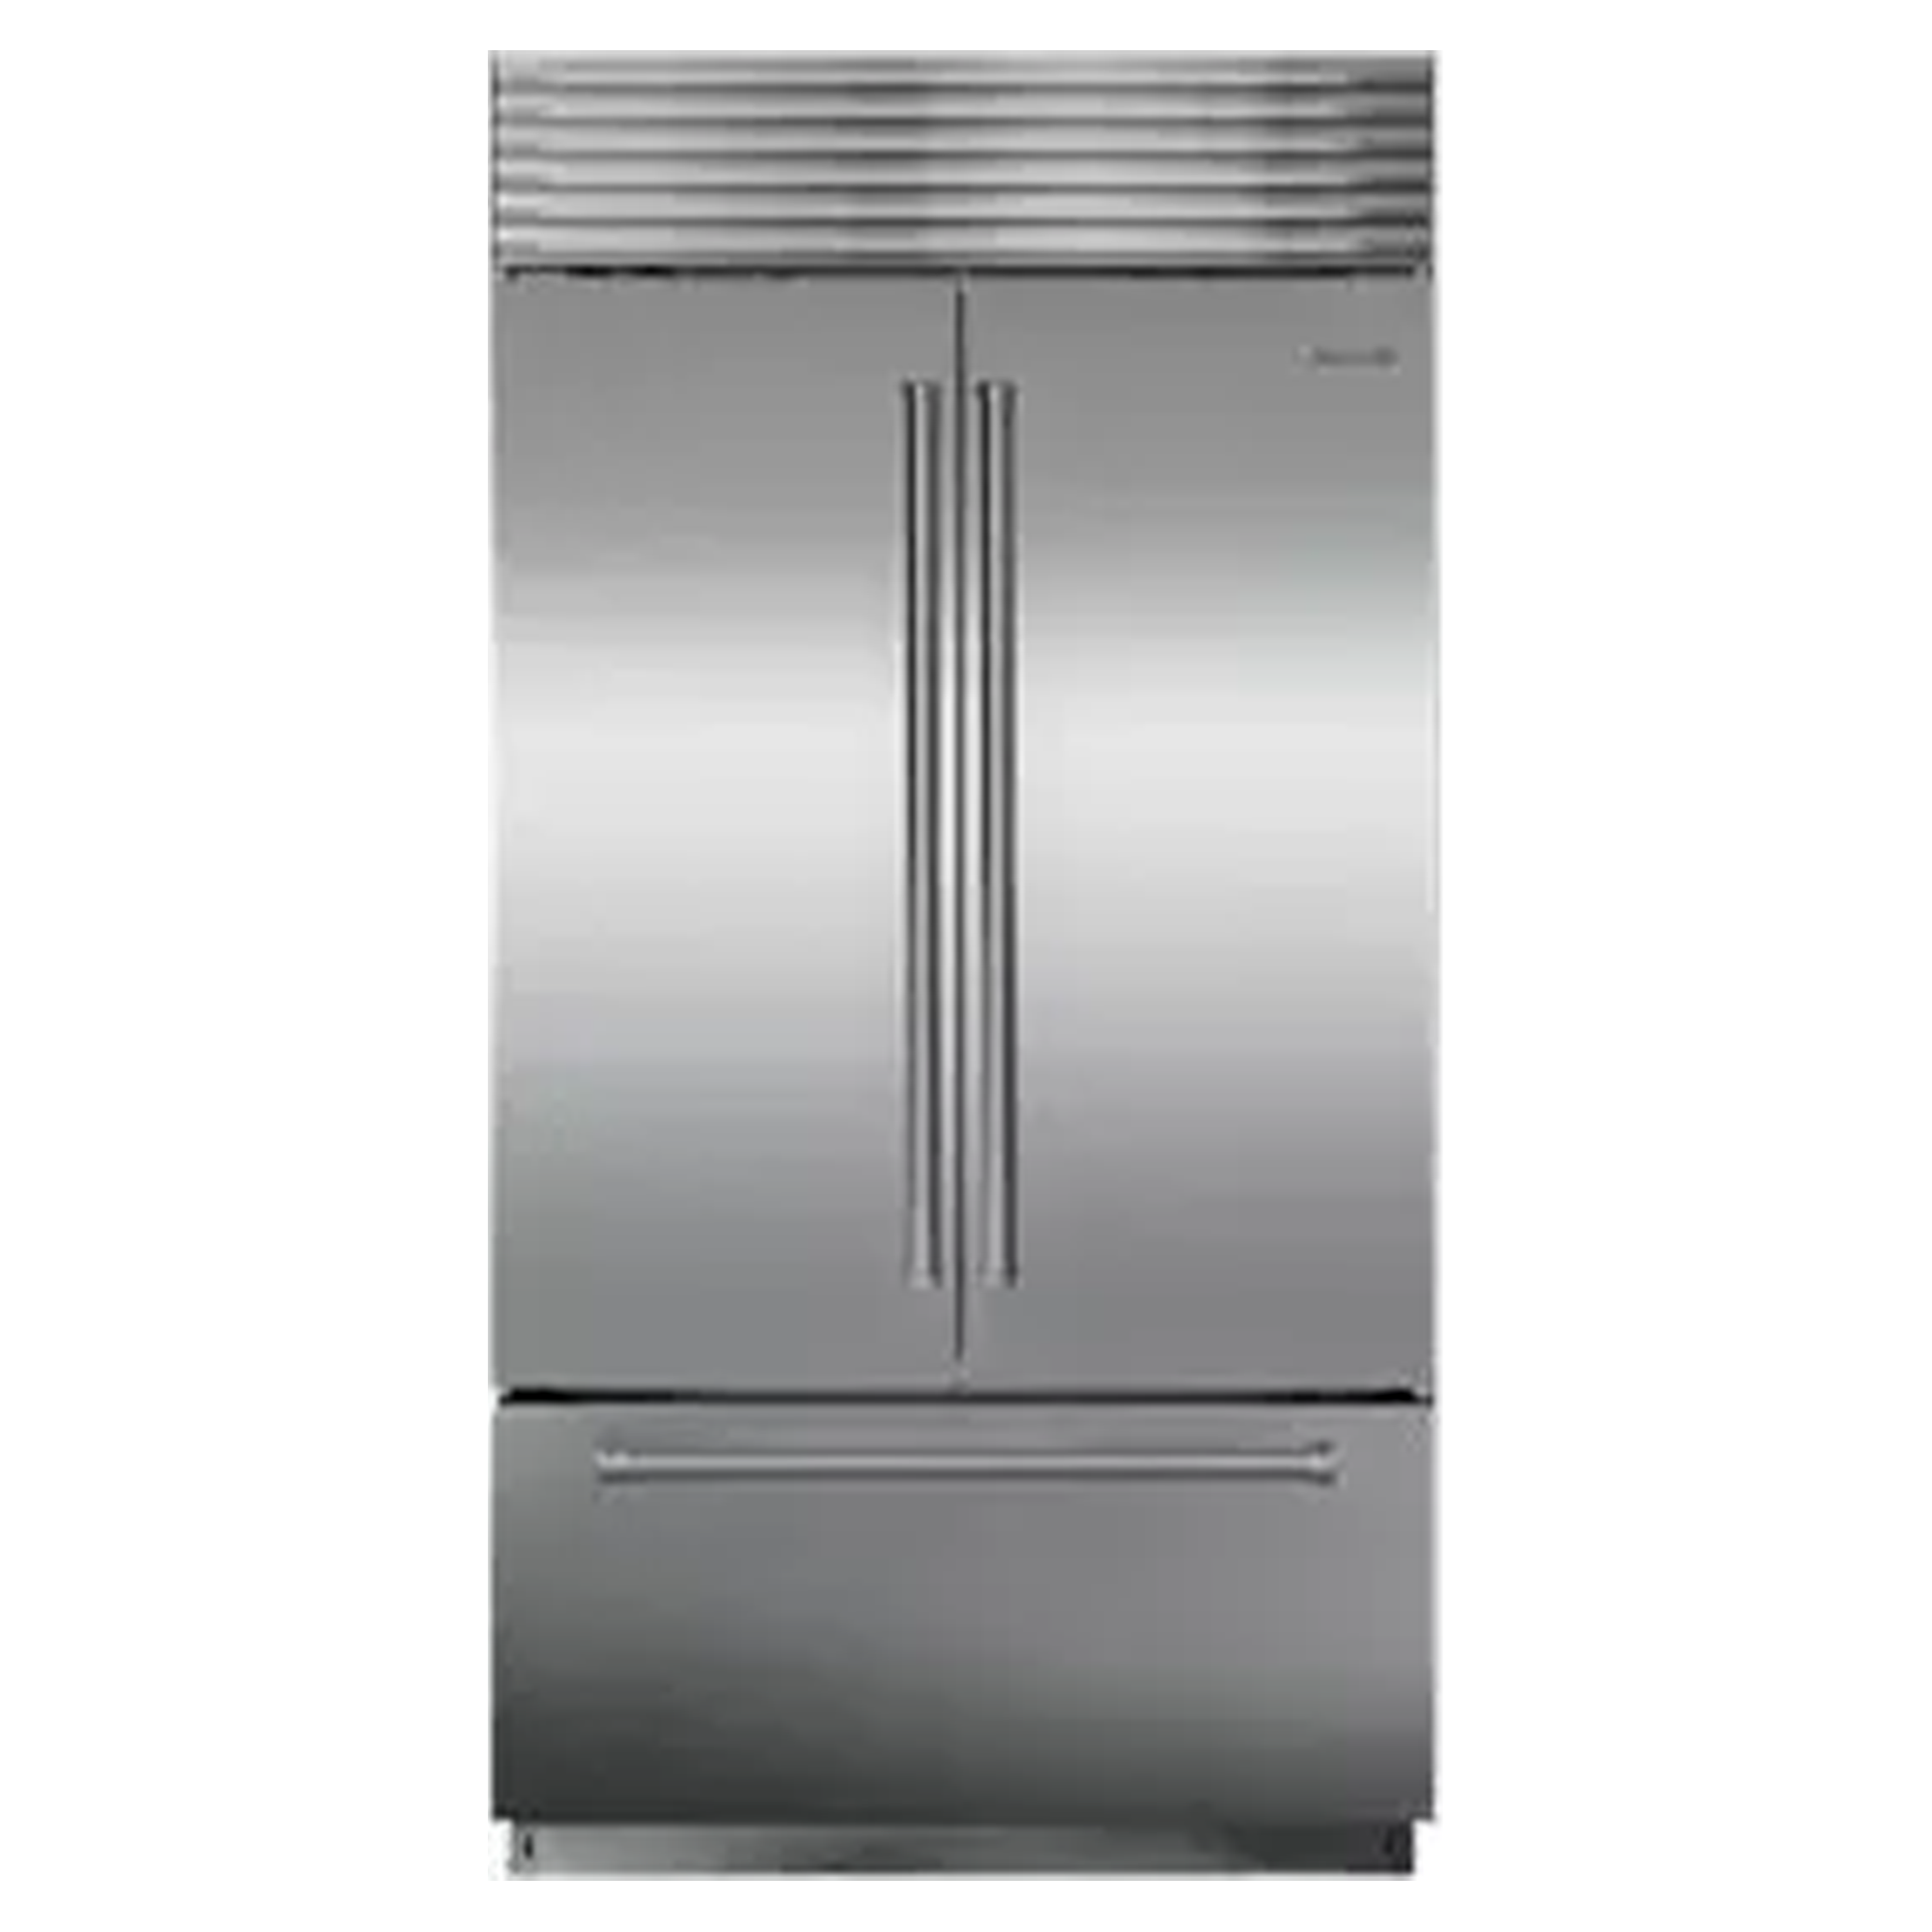 Refrigerator Freezer french door 42 inch